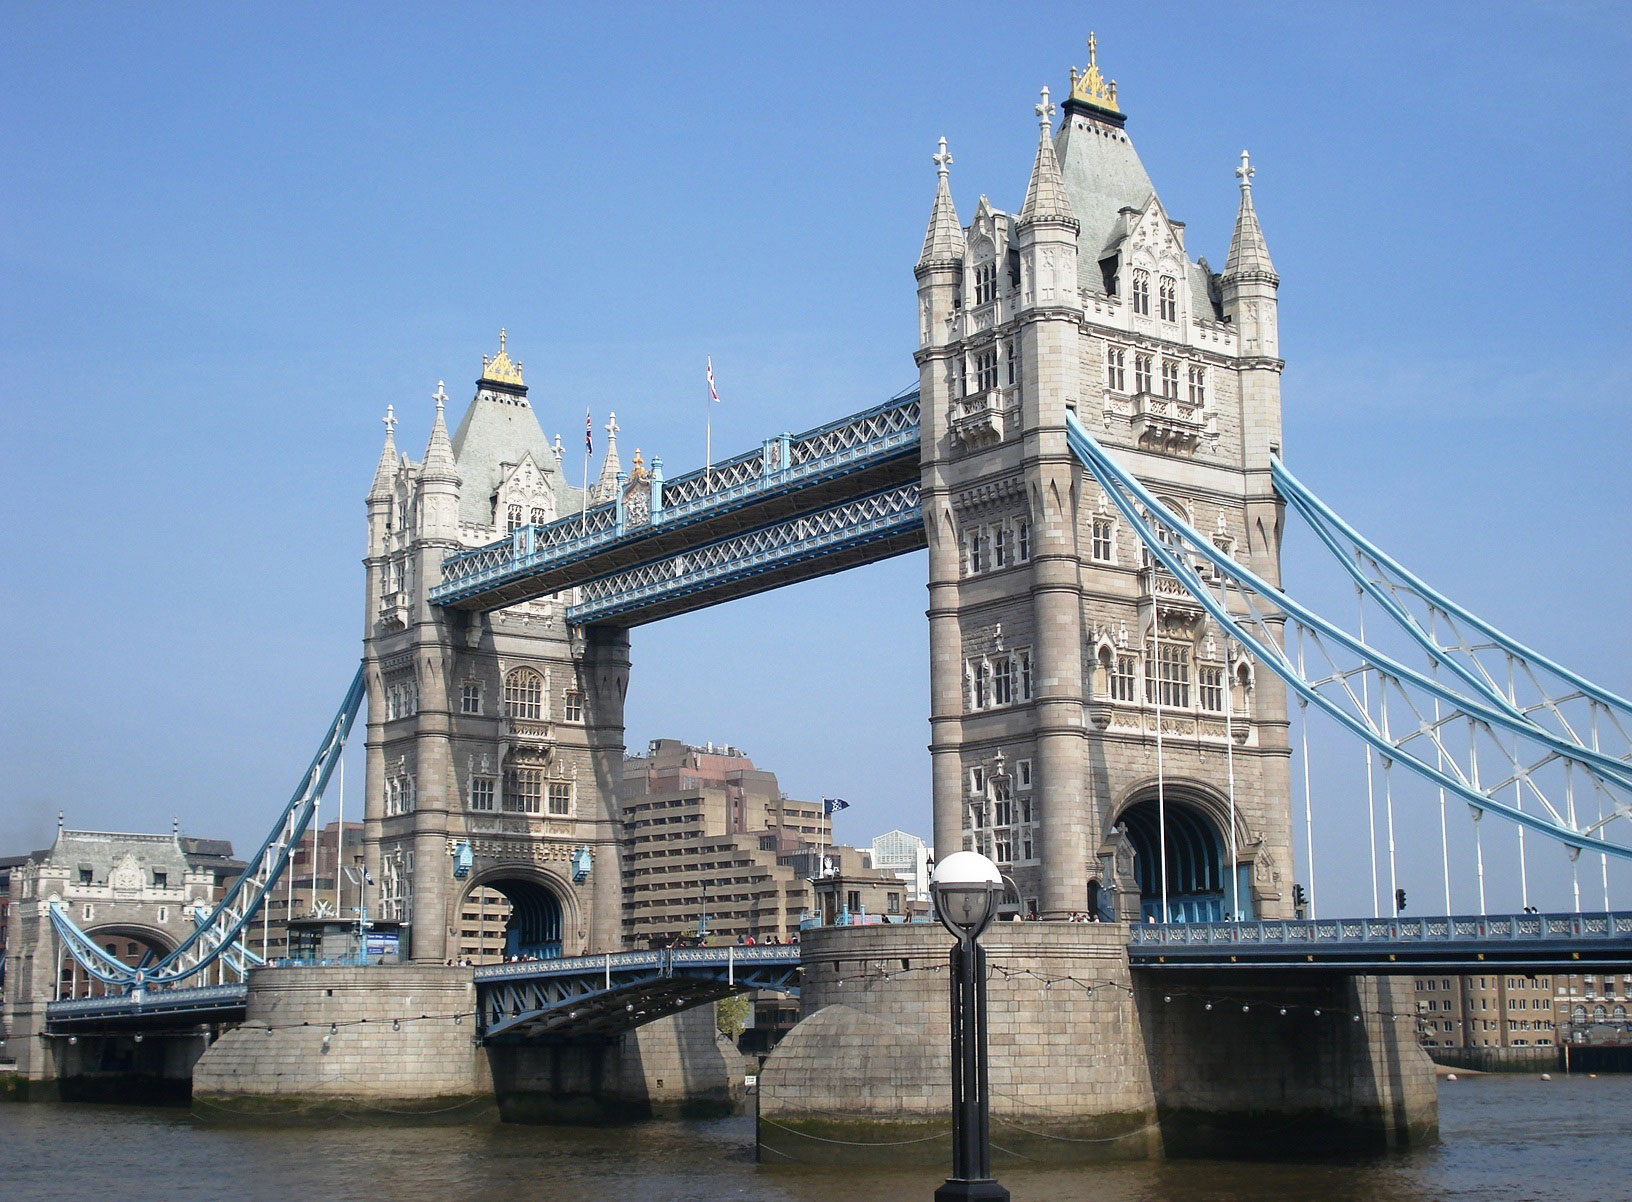 London, England is most expensive international city for a summer trip, according to TripAdvisor. (A TripAdvisor traveler photo)